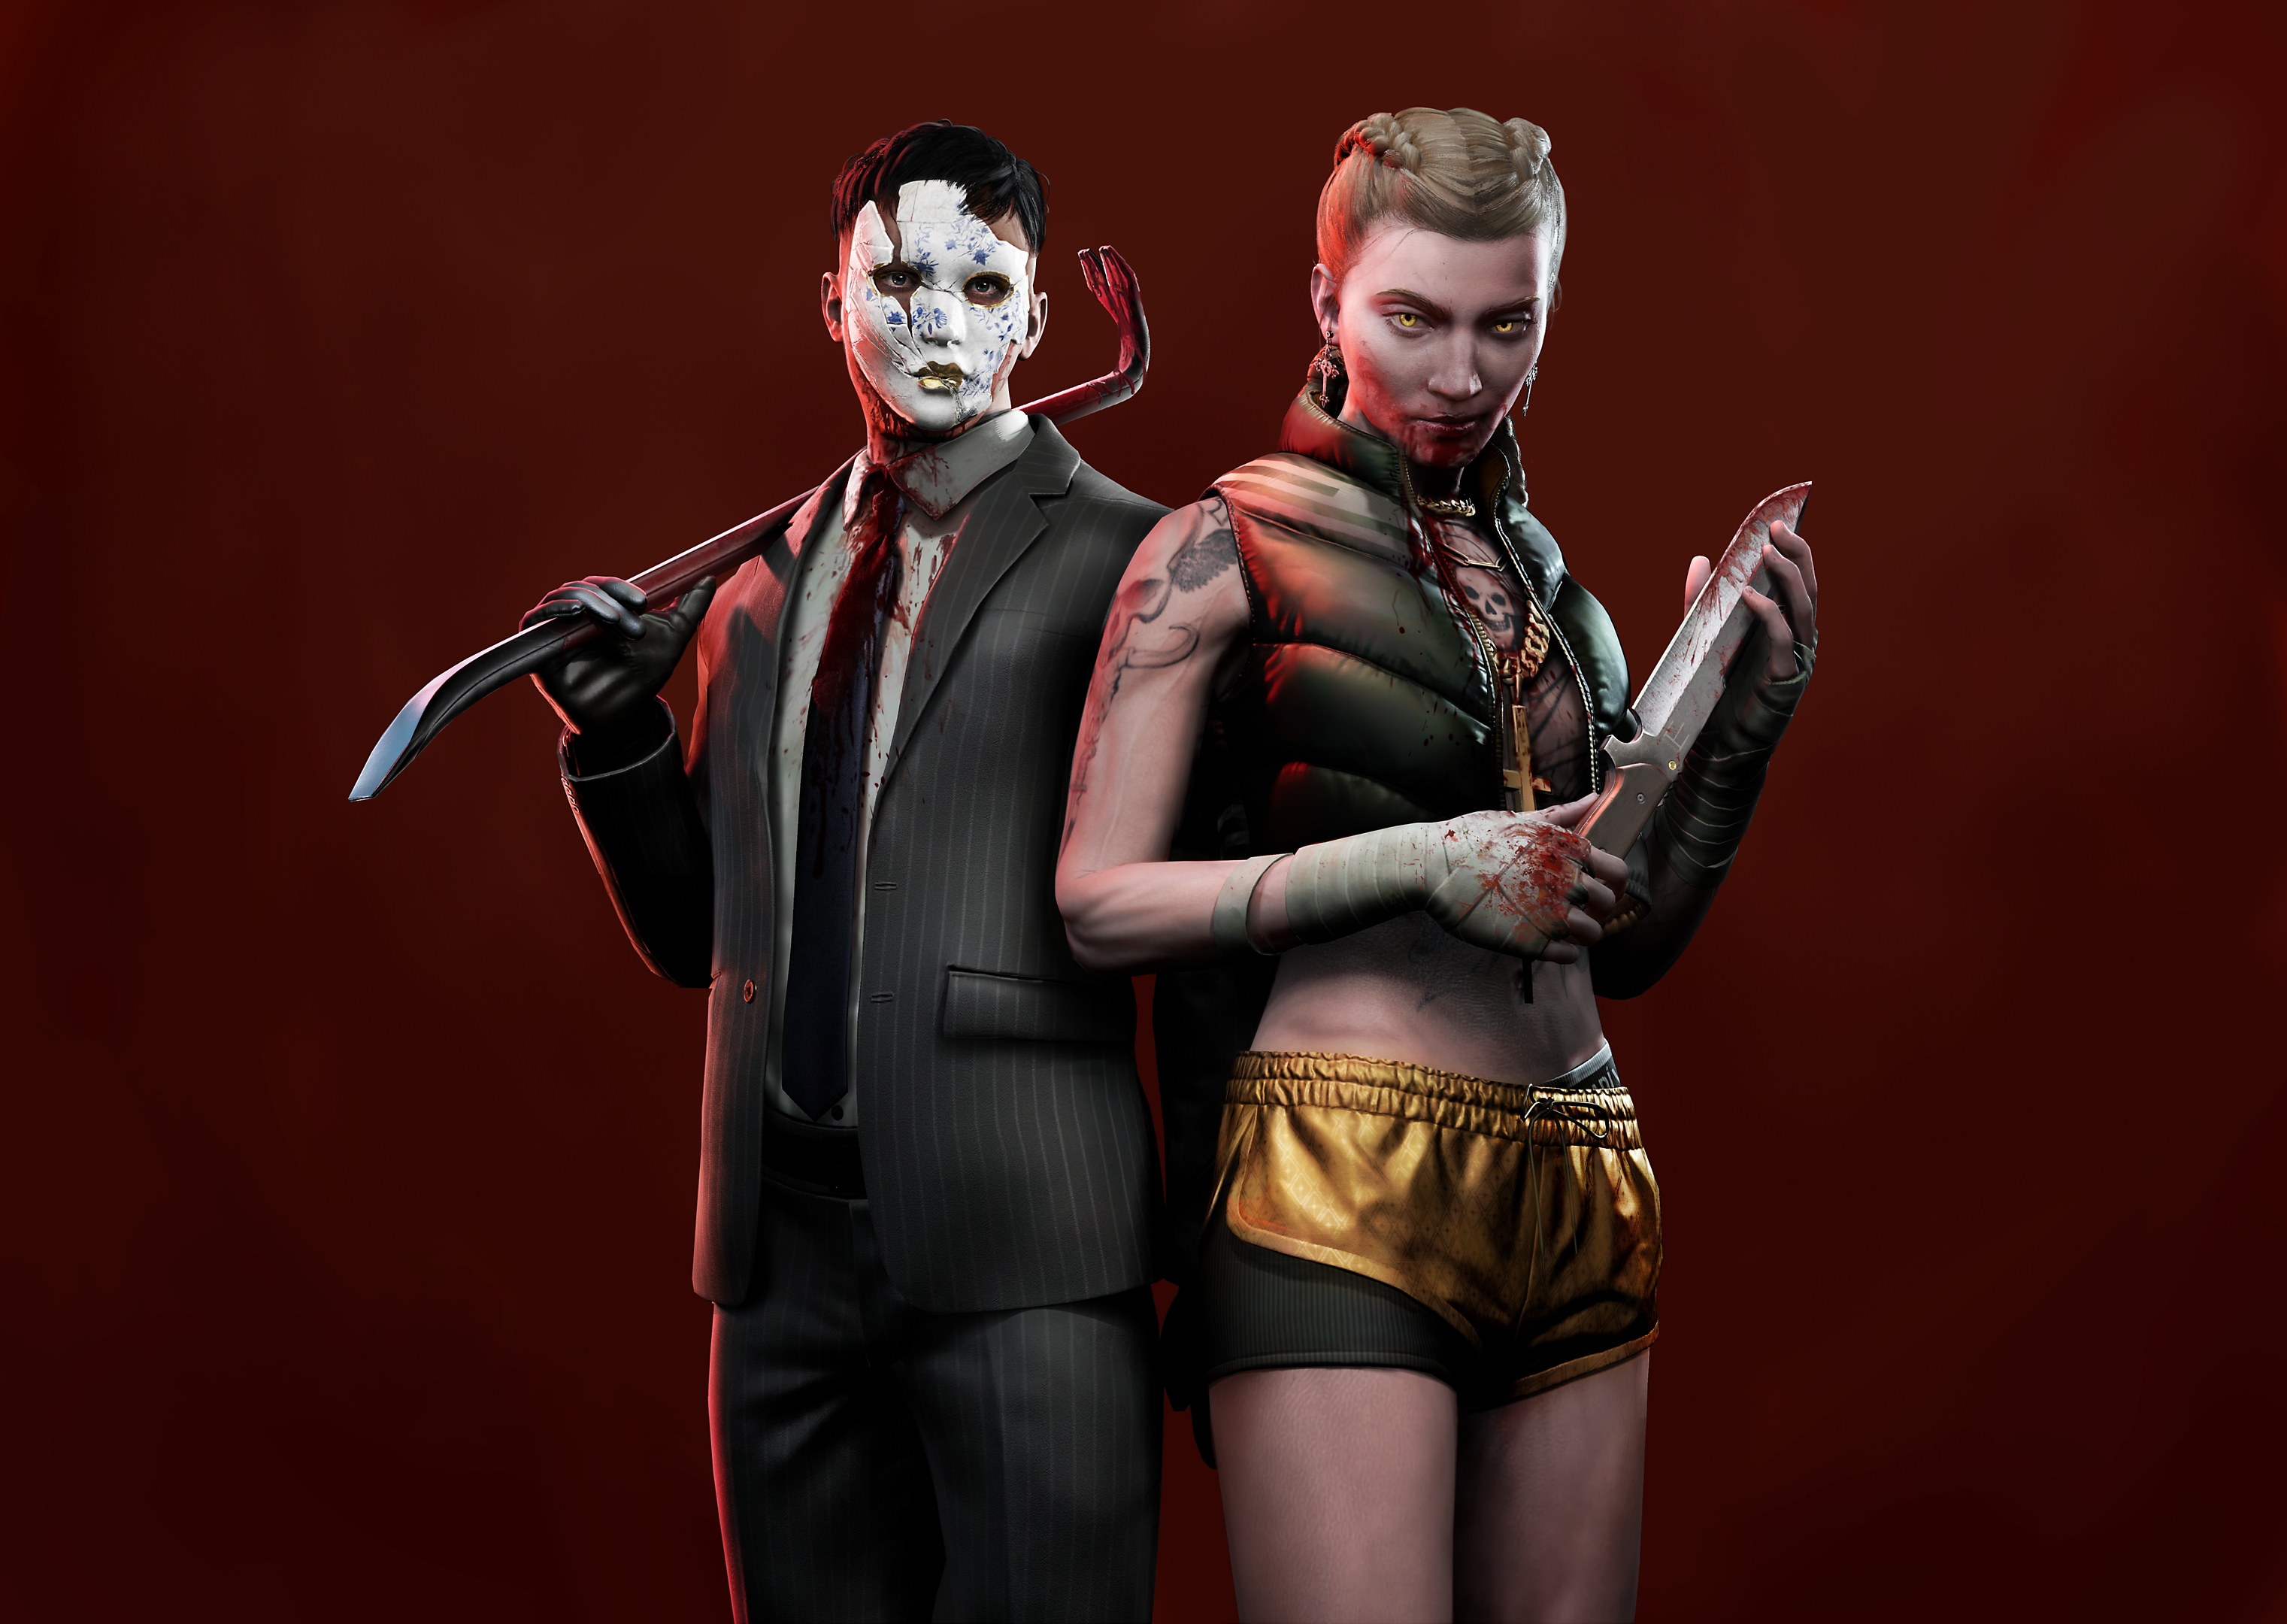 Vampire the Masquerade – Bloodhunt – снимок экрана с новым оружием: ломик и нож